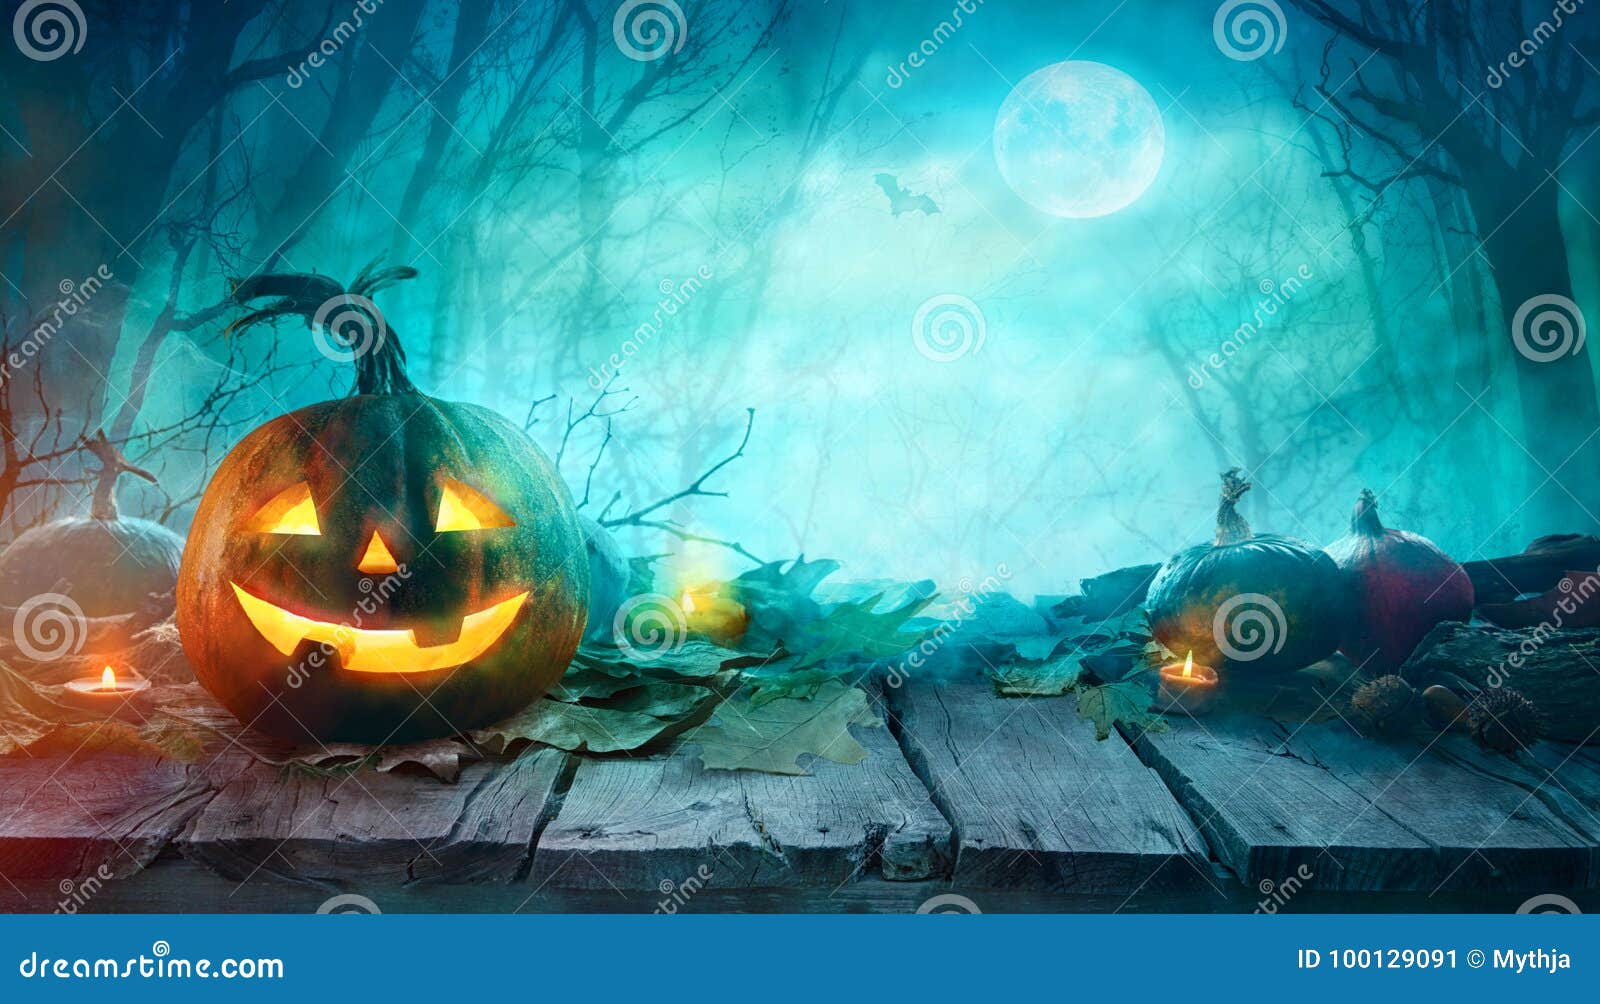 halloween scary pumpkins